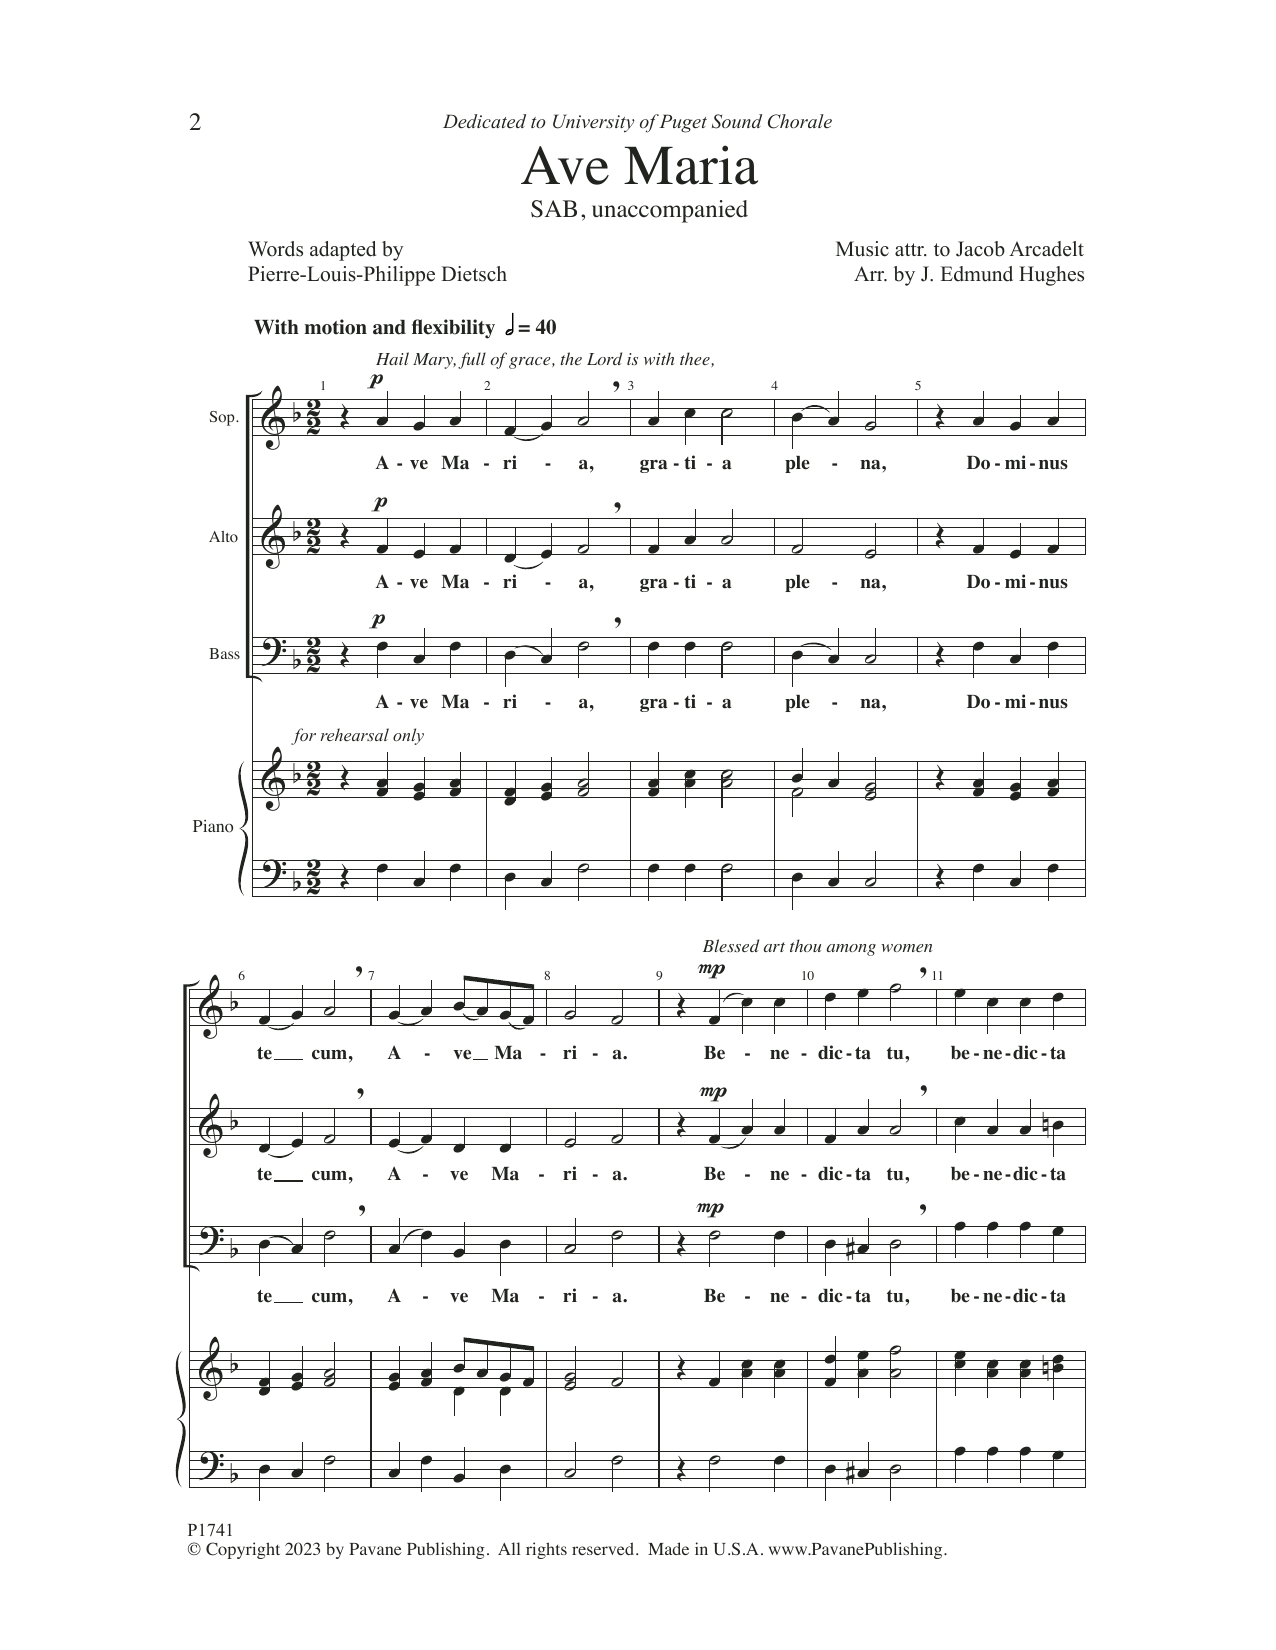 J. Edmund Hughes Ave Maria sheet music notes and chords arranged for SAB Choir